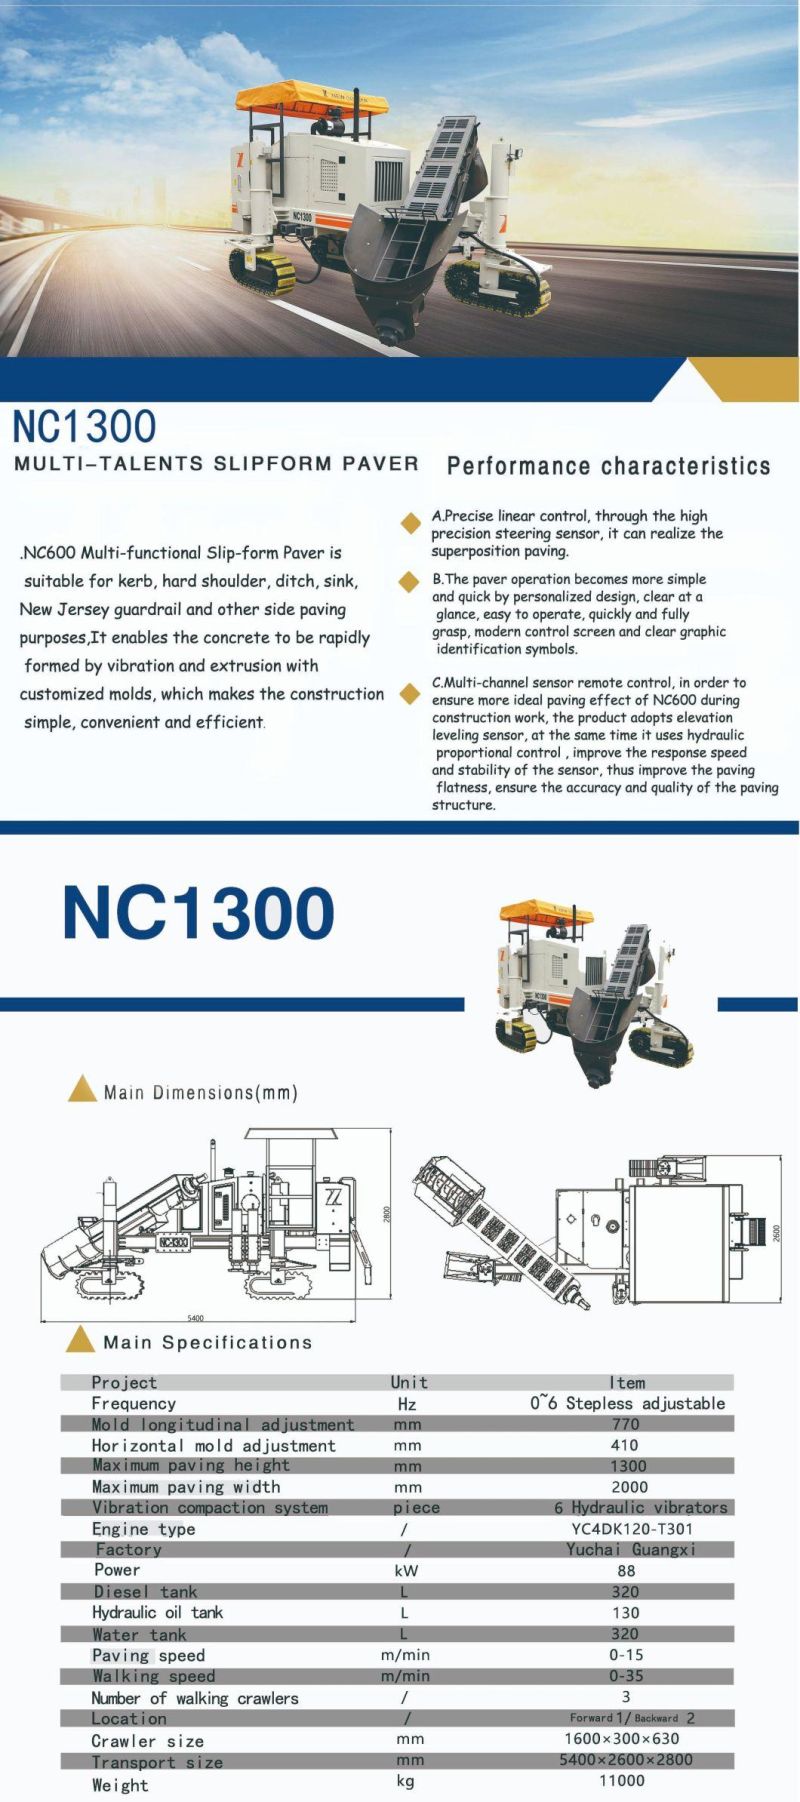 Nc1300 Slip-Form Paver for Road Construction Works